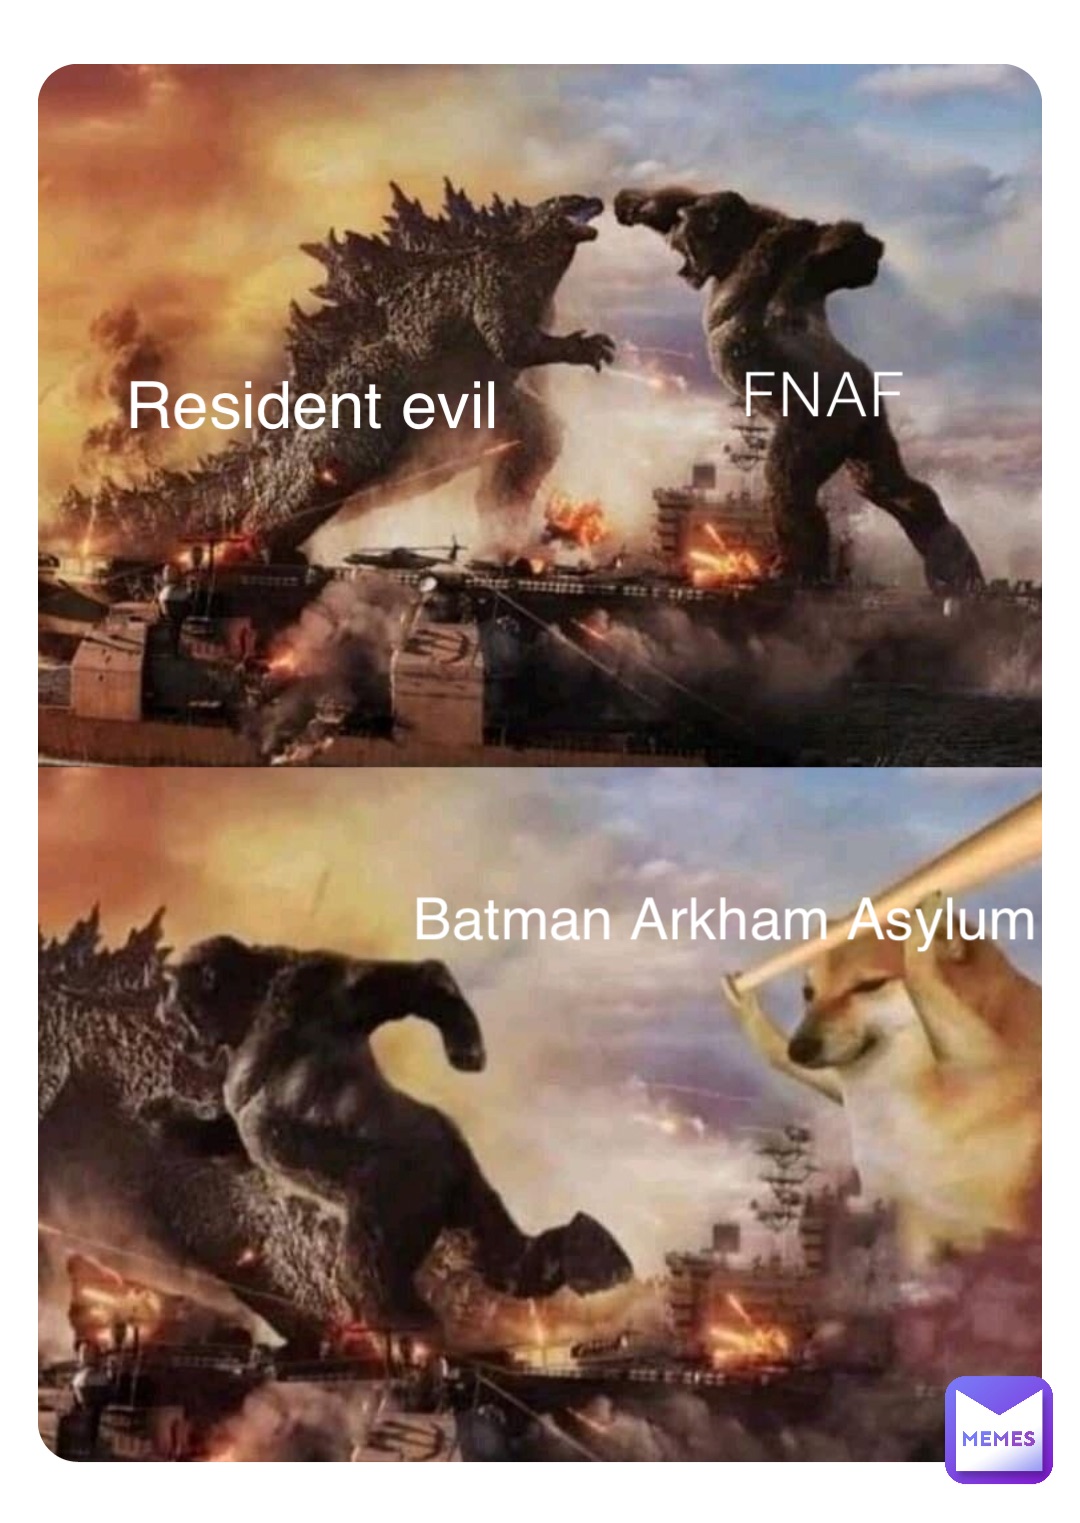 FNAF Batman Arkham Asylum Resident evil | @HiGuys1024 | Memes